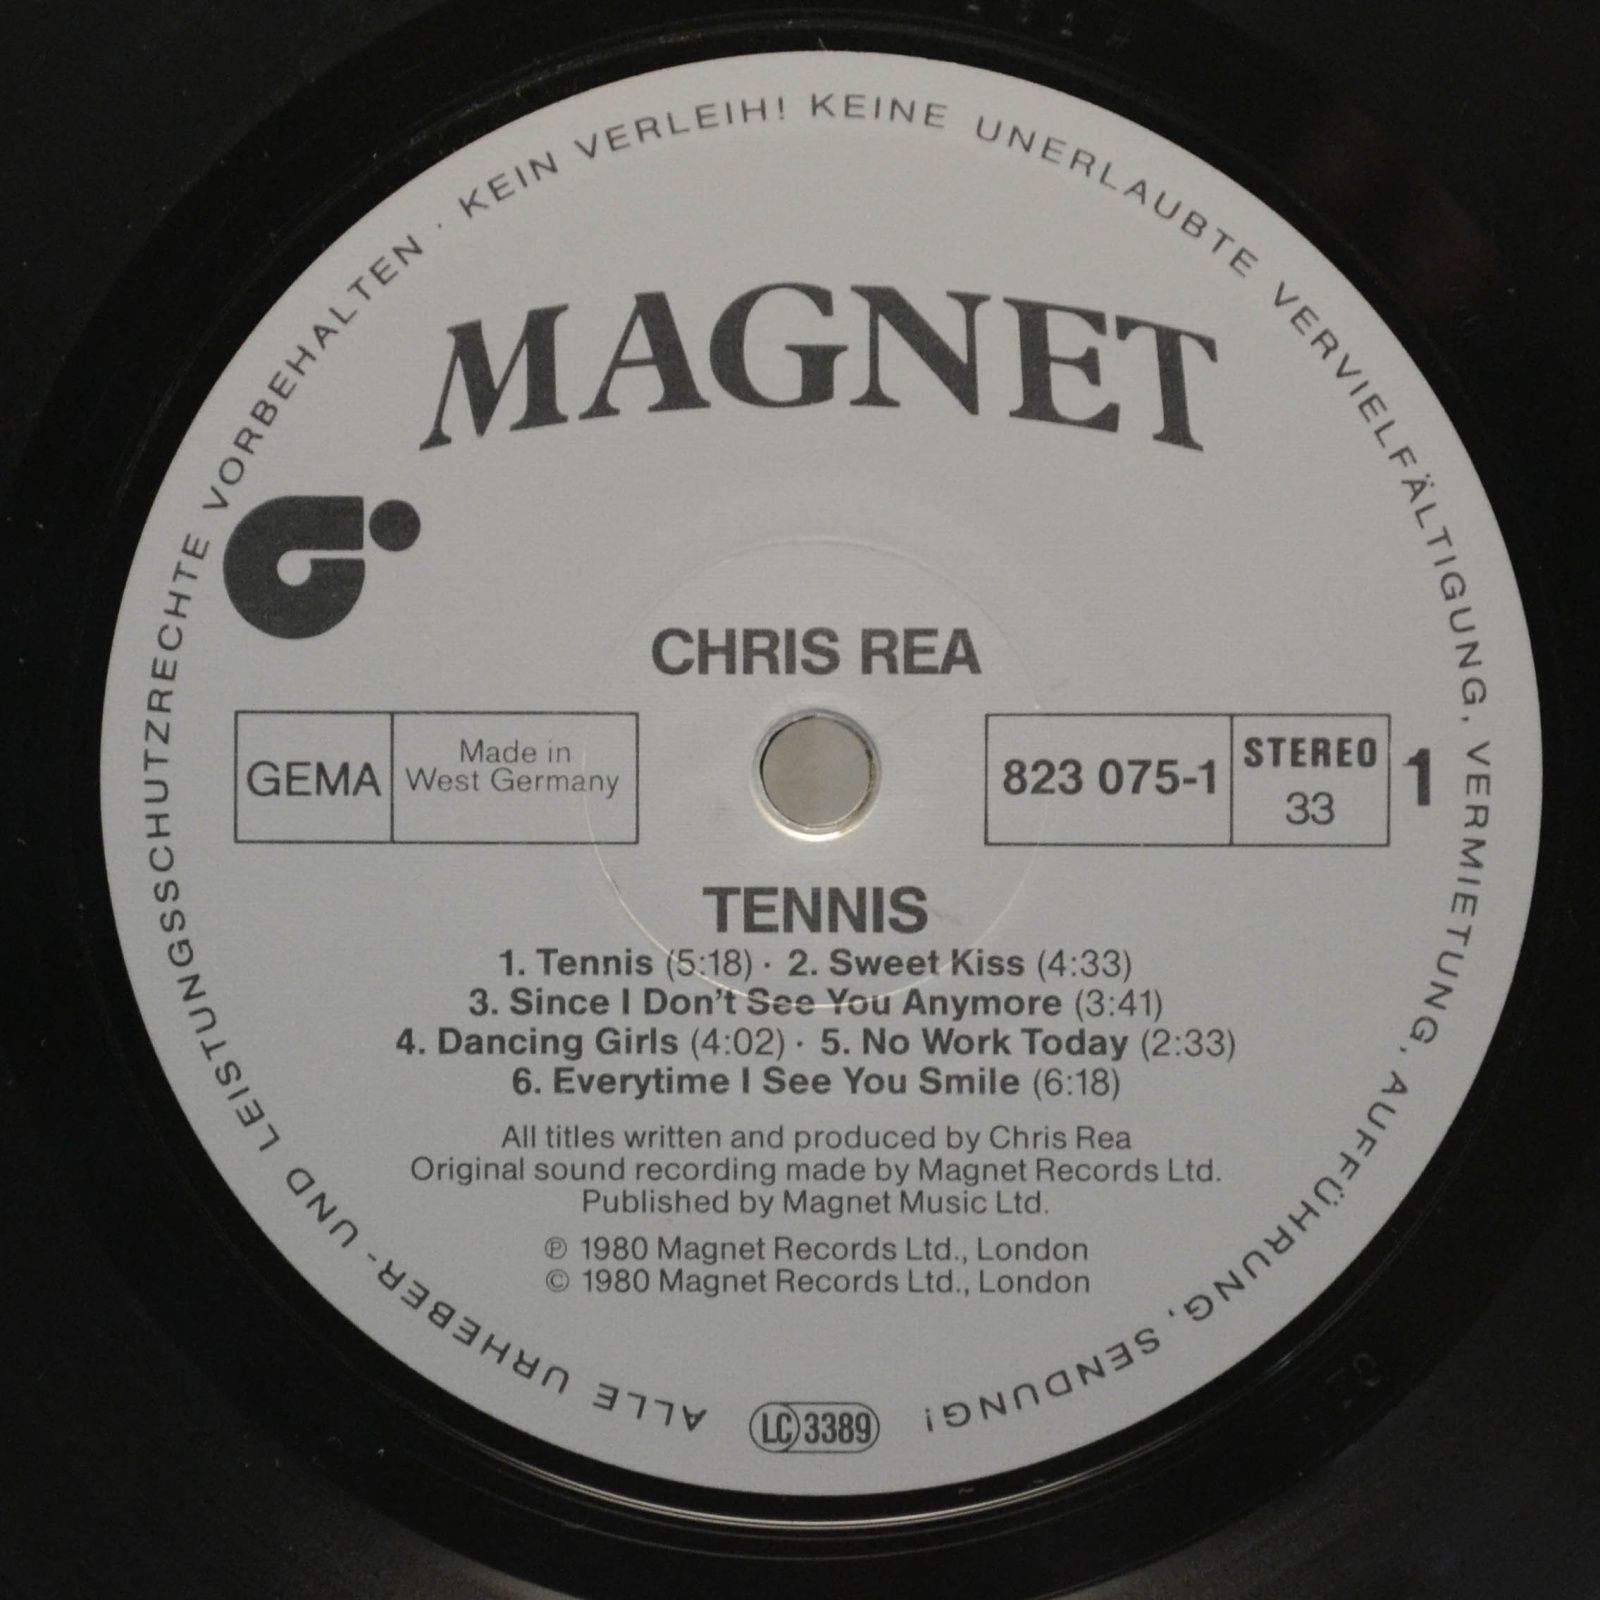 Chris Rea — Tennis, 1980